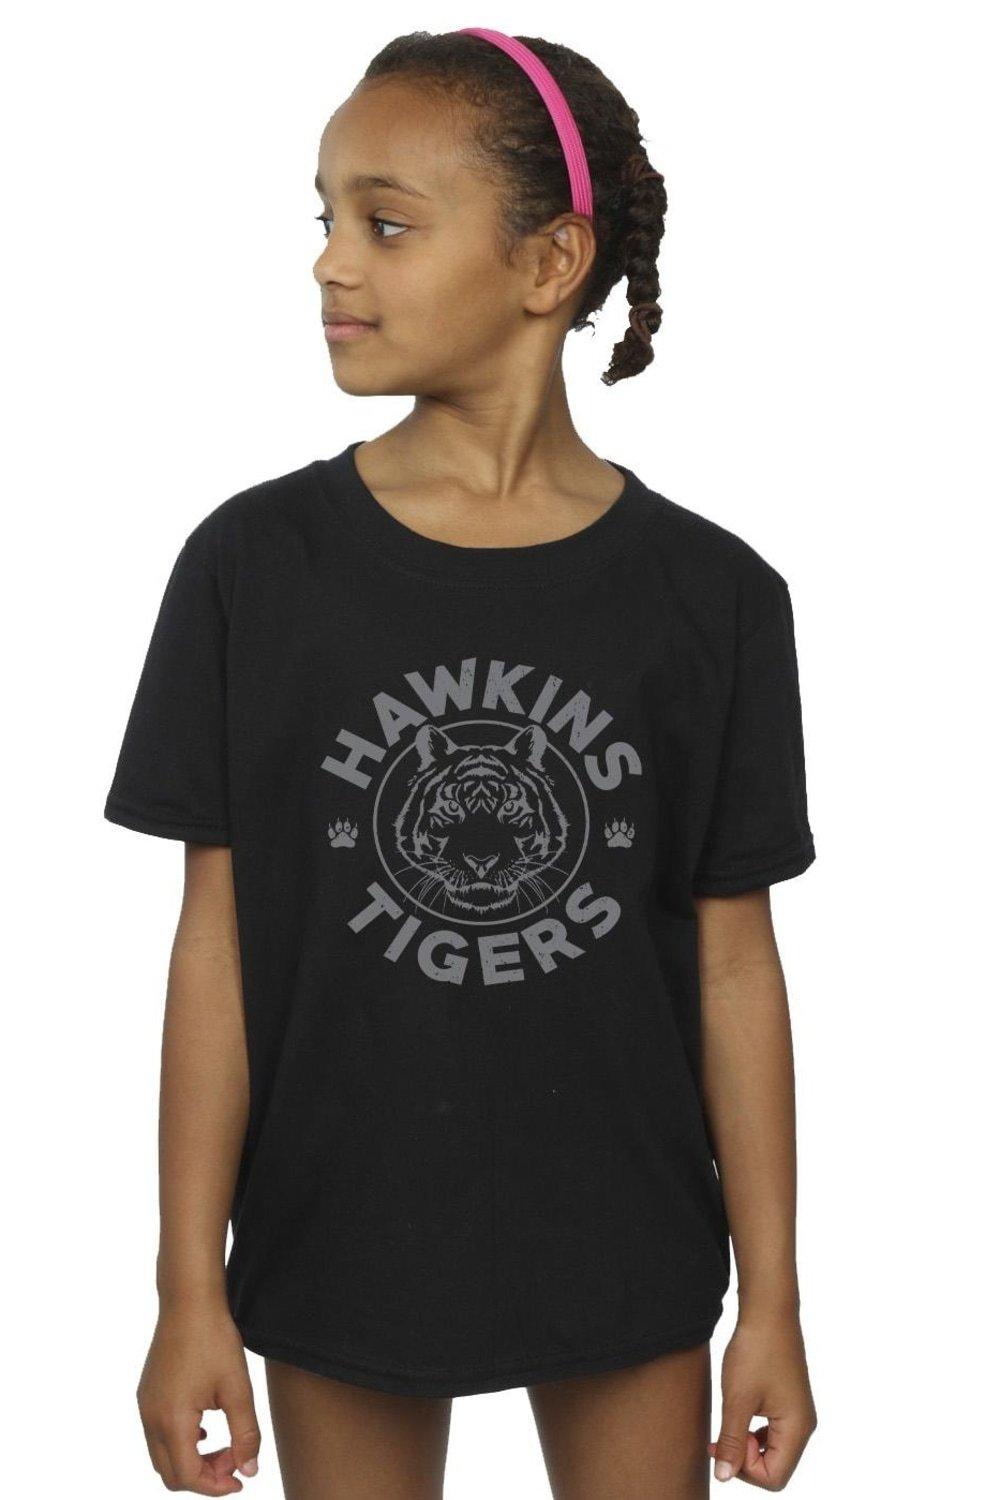 Stranger Things Hawkins Grey Tiger Cotton T-Shirt